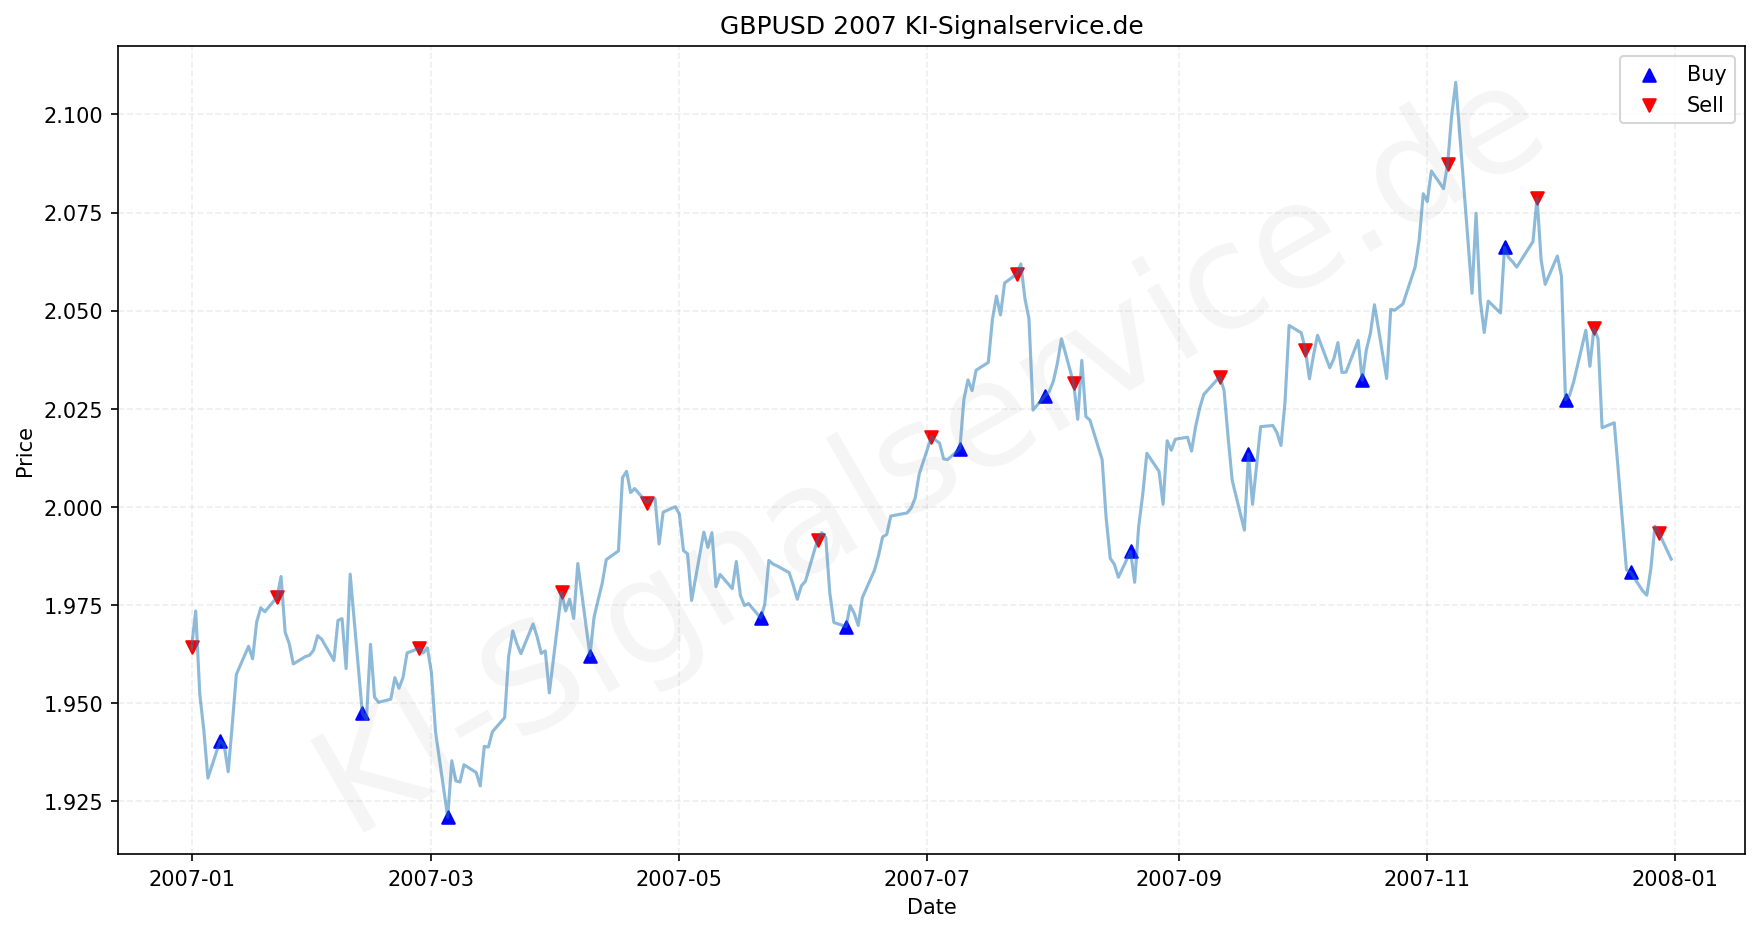 GBPUSD Chart - KI Tradingsignale 2007